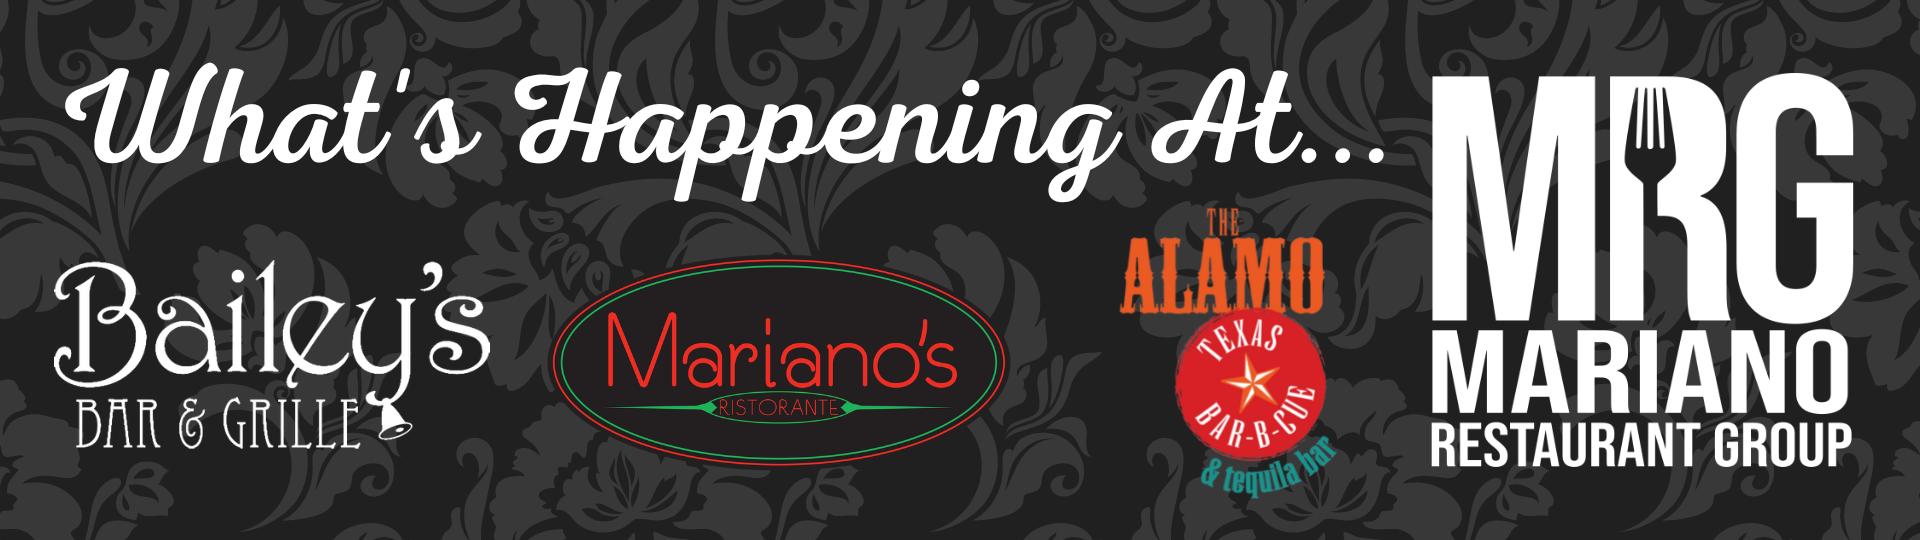 The MRG Restaurant group logos - Baileys, Marianos, The Alamo, and Mariano Restaurant group. Text: What's Happening At...